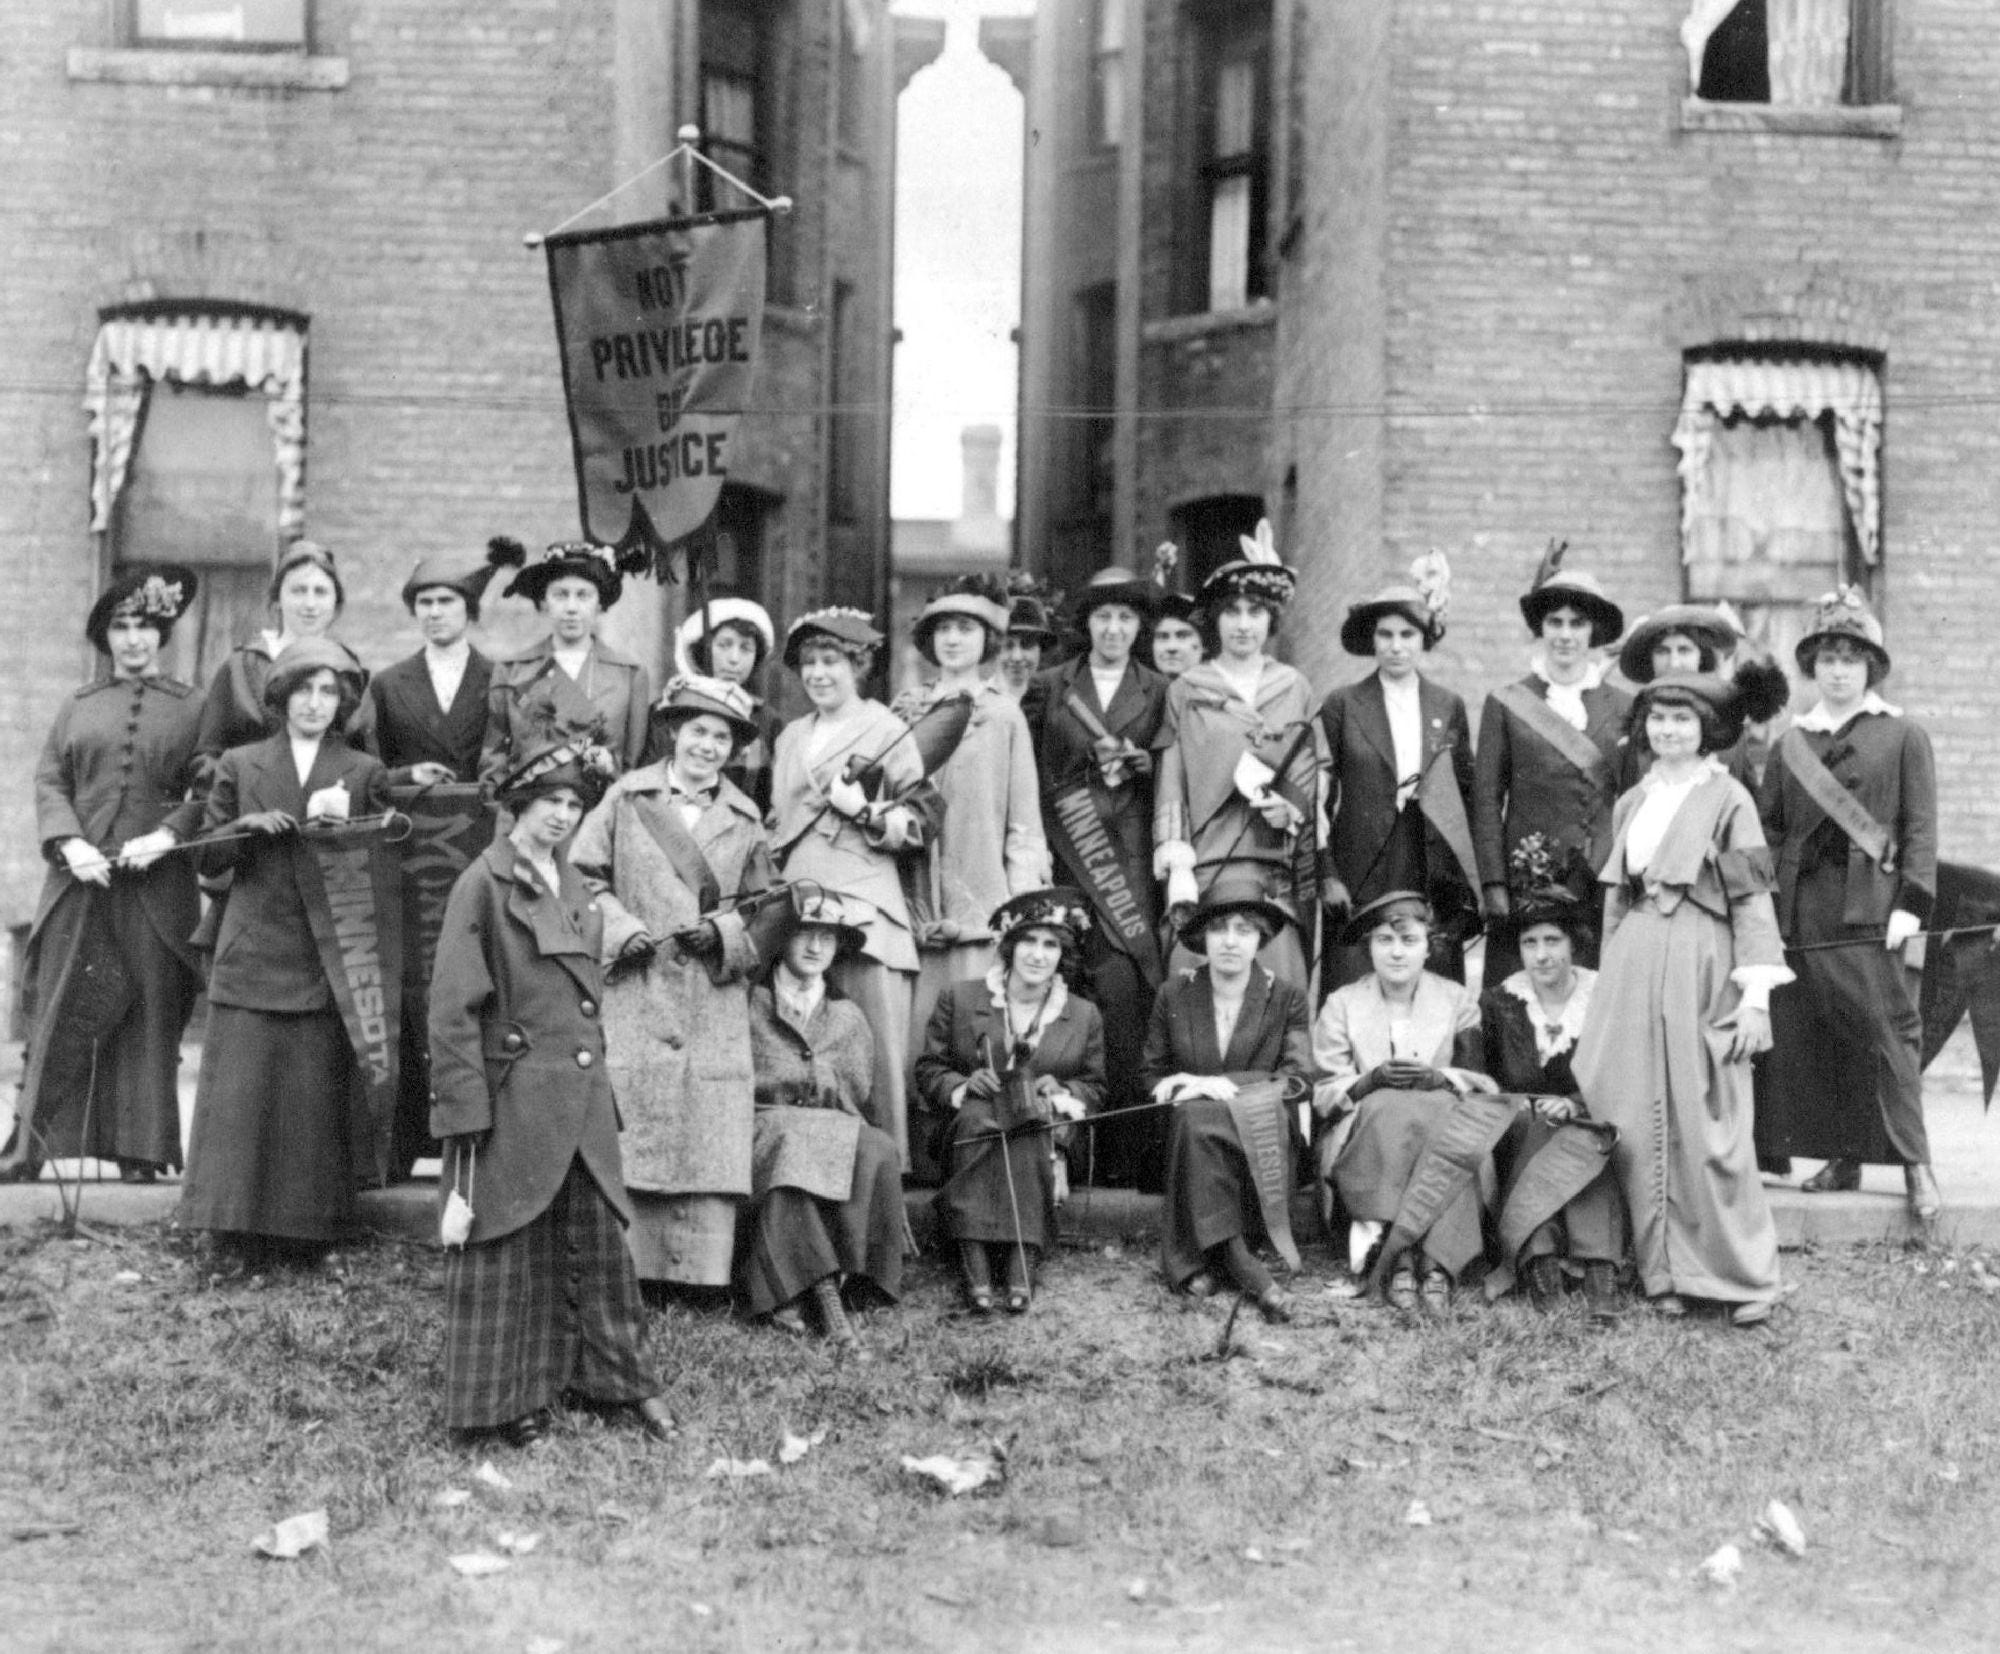 Members of the 1913 University of Minnesota Women's Suffrage Club